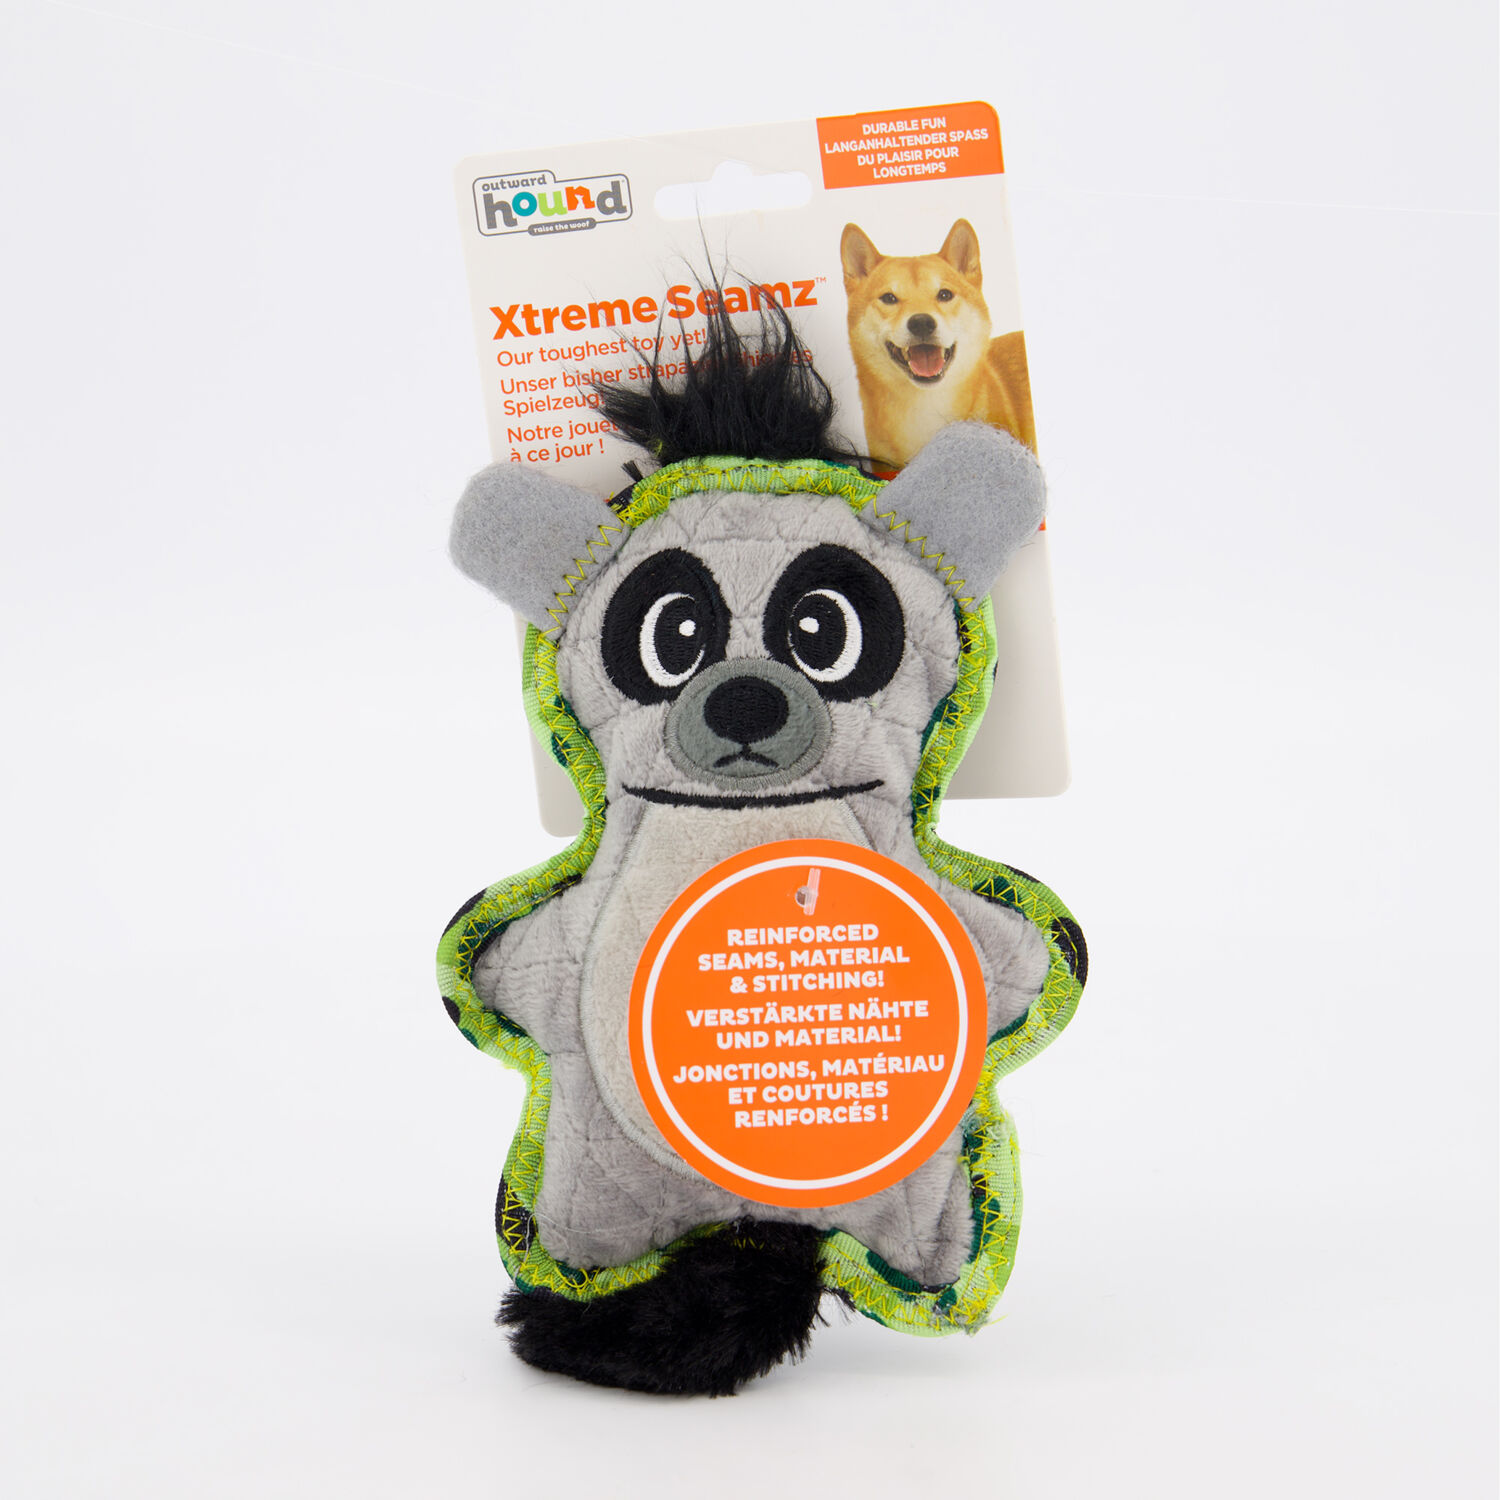 Outward Hound Xtreme Seamz Lemur Dog Toy, Small